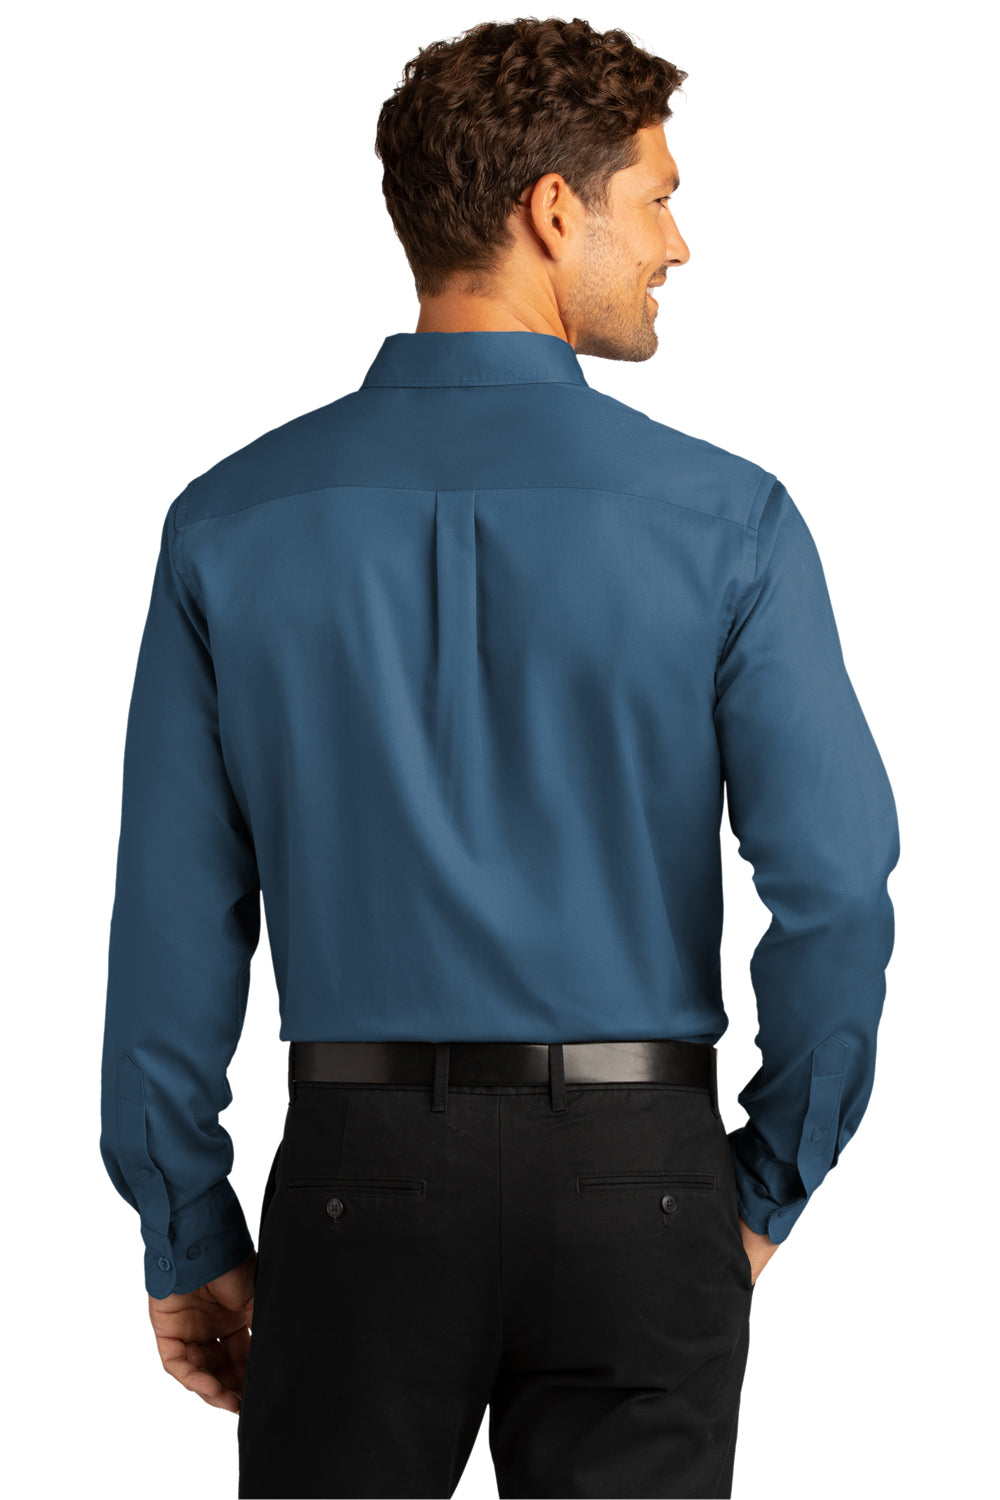 Port Authority Mens SuperPro Wrinkle Resistant React Long Sleeve Button Down Shirt w/ Pocket Regatta Blue Side